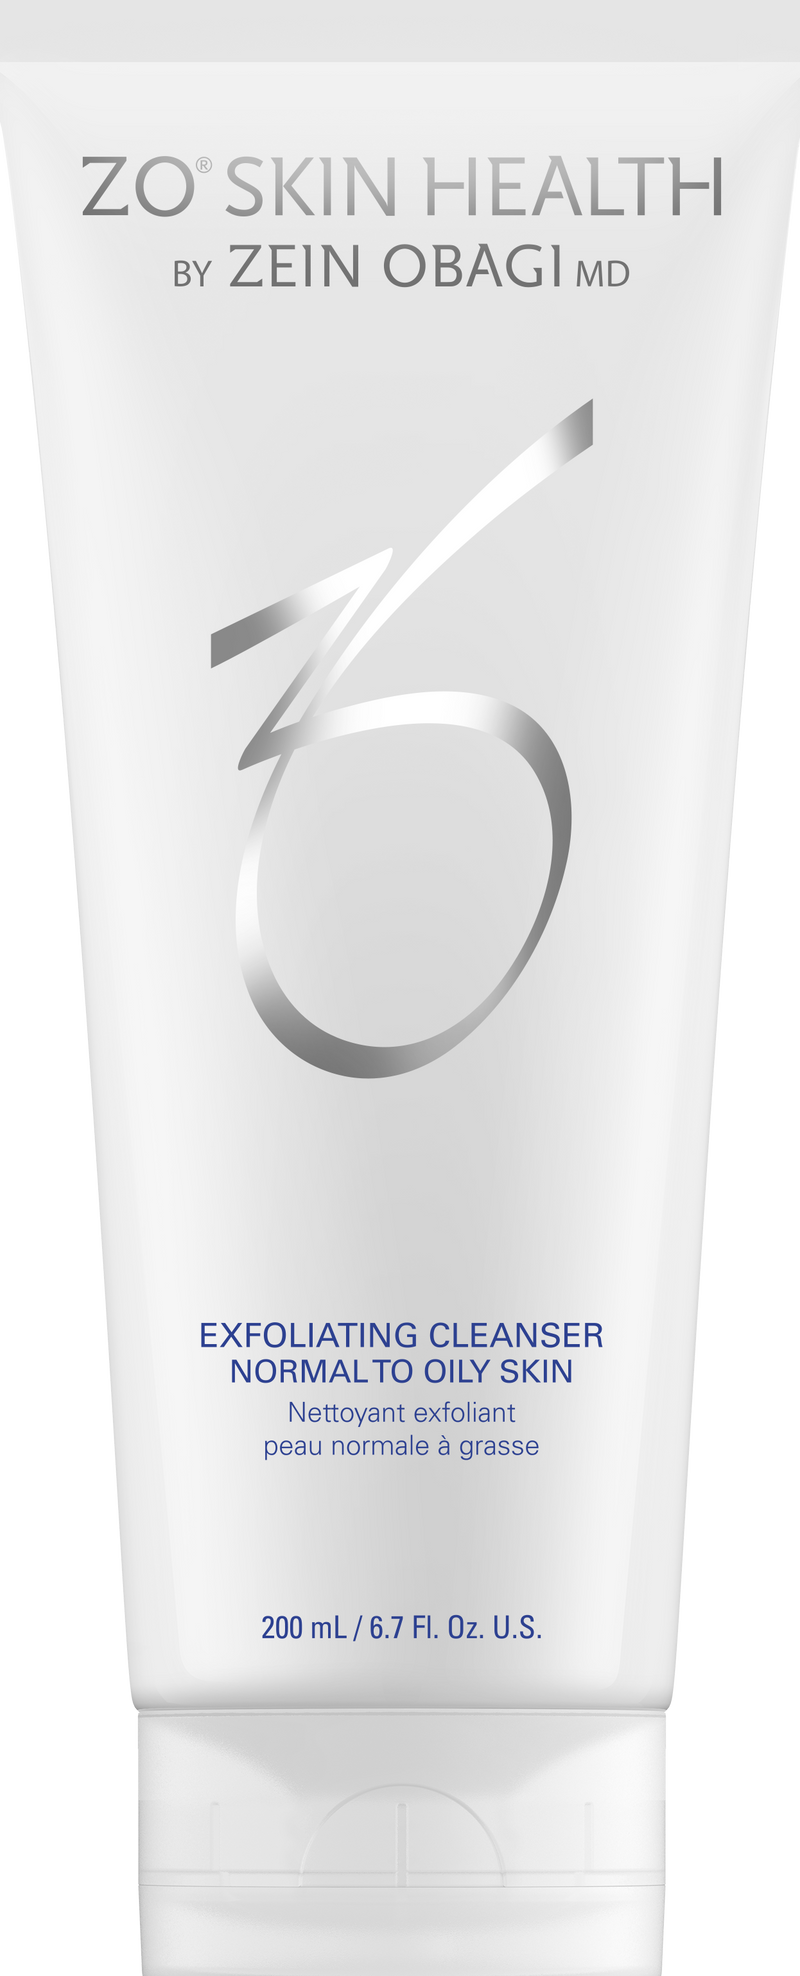 ZO Exfoliating Cleanser